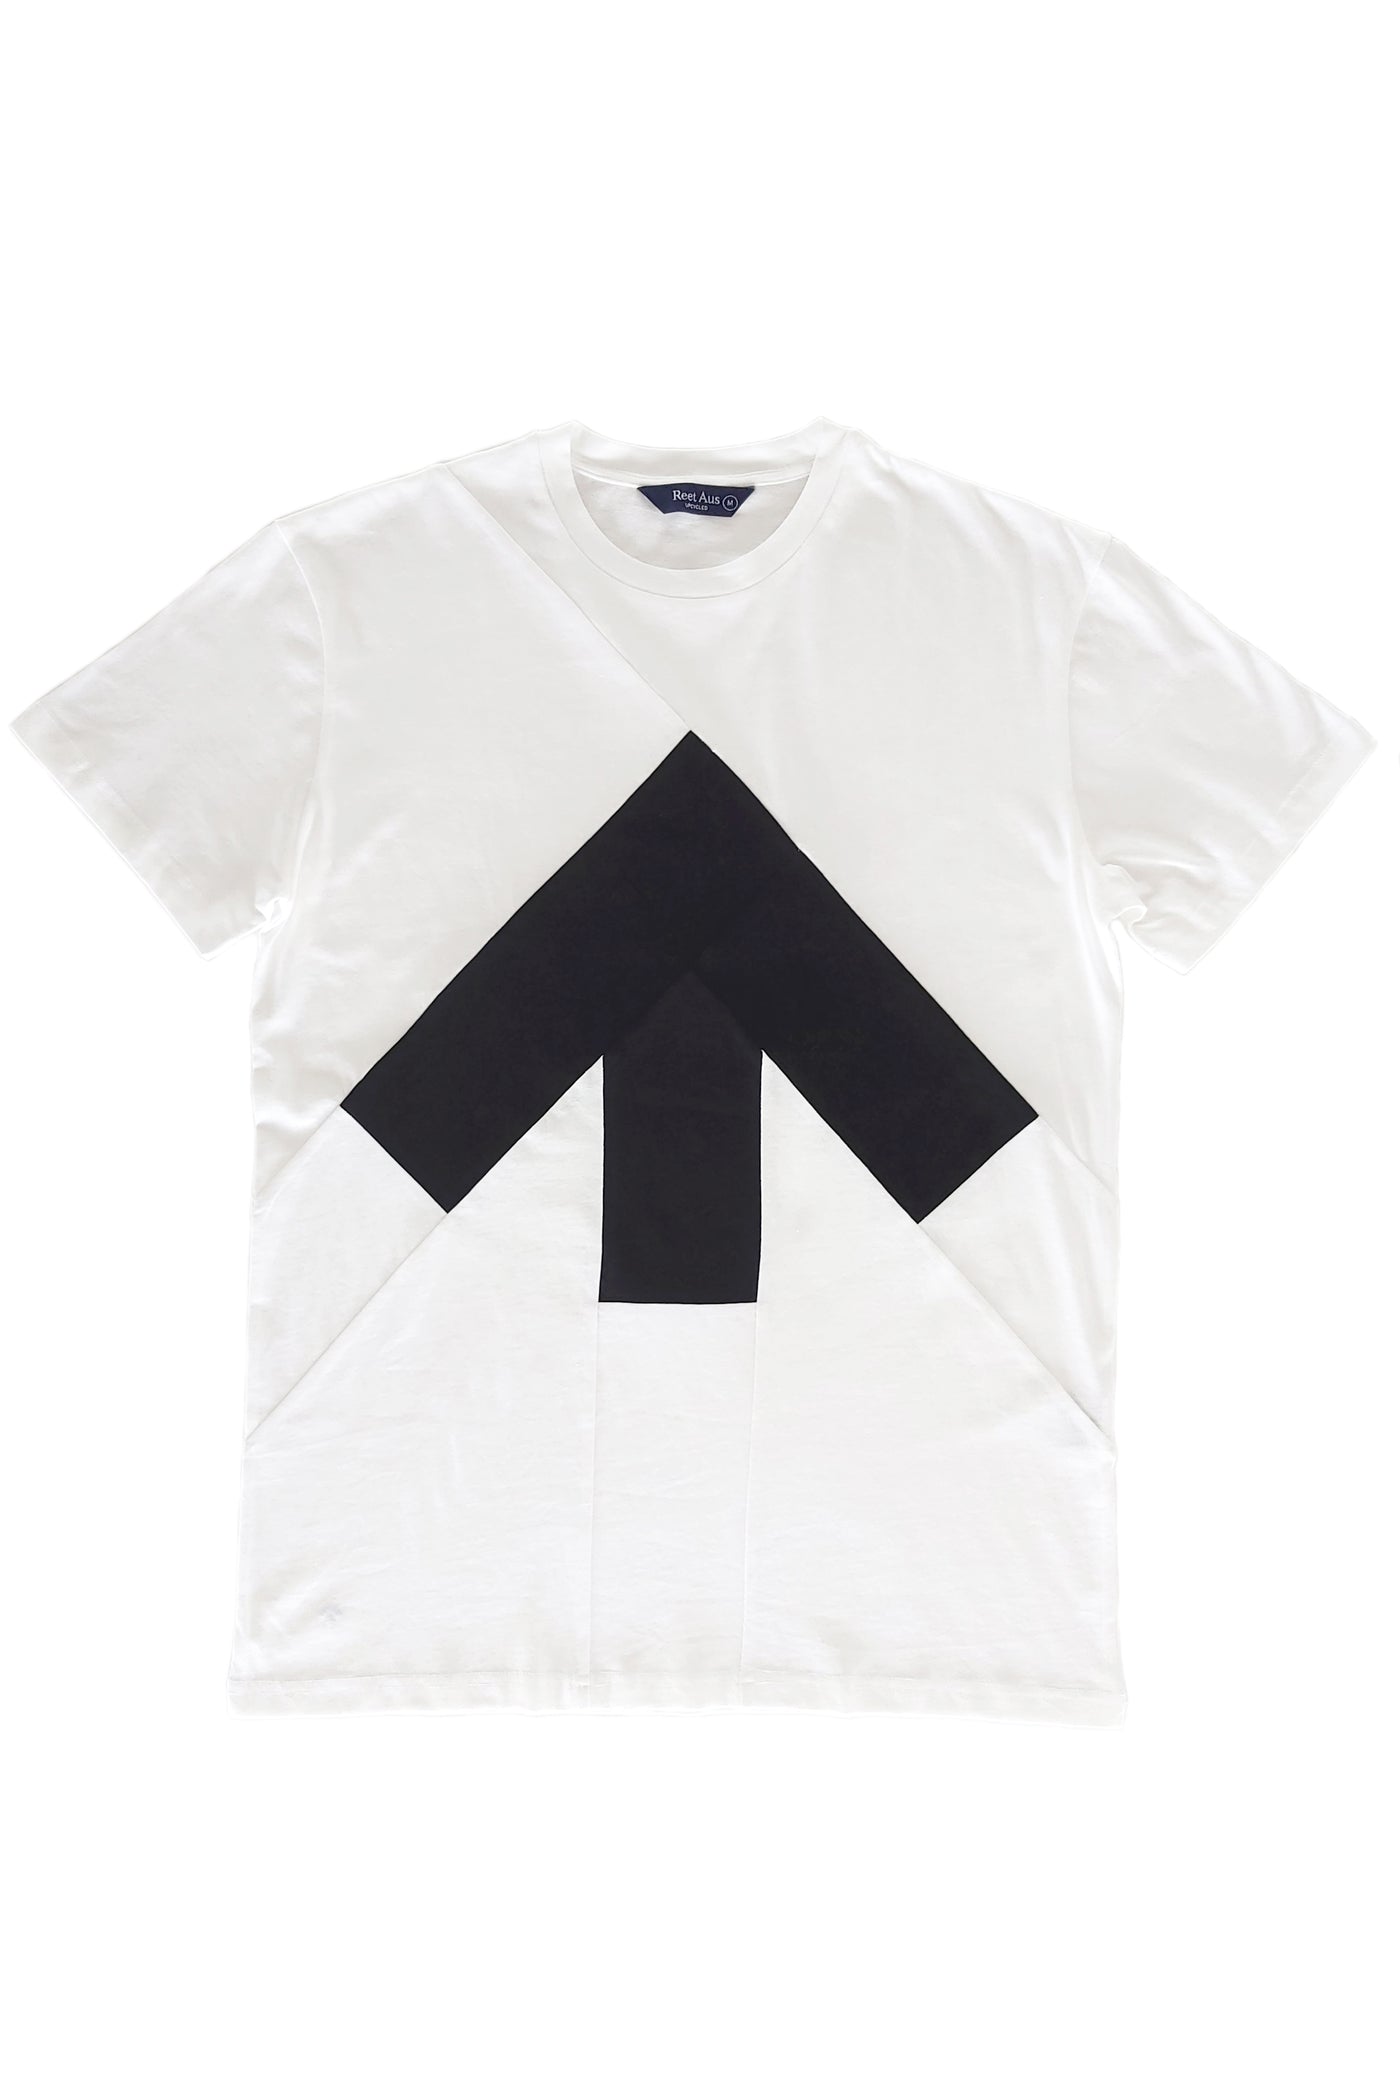 Up-shirt for men | White, black - Reet Aus